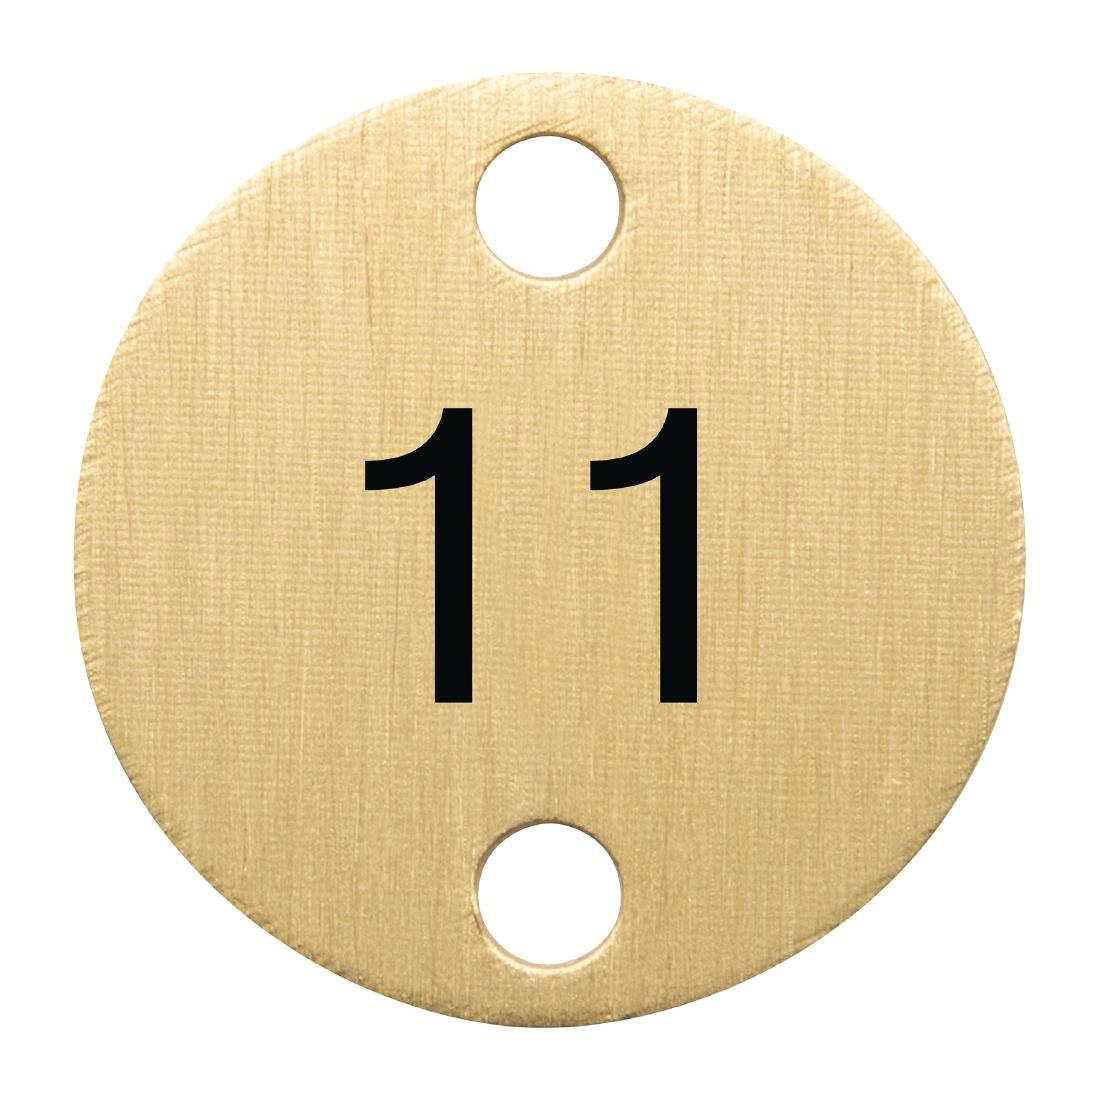 Bolero Table Numbers Bronze (11-15) - DY776  - 1